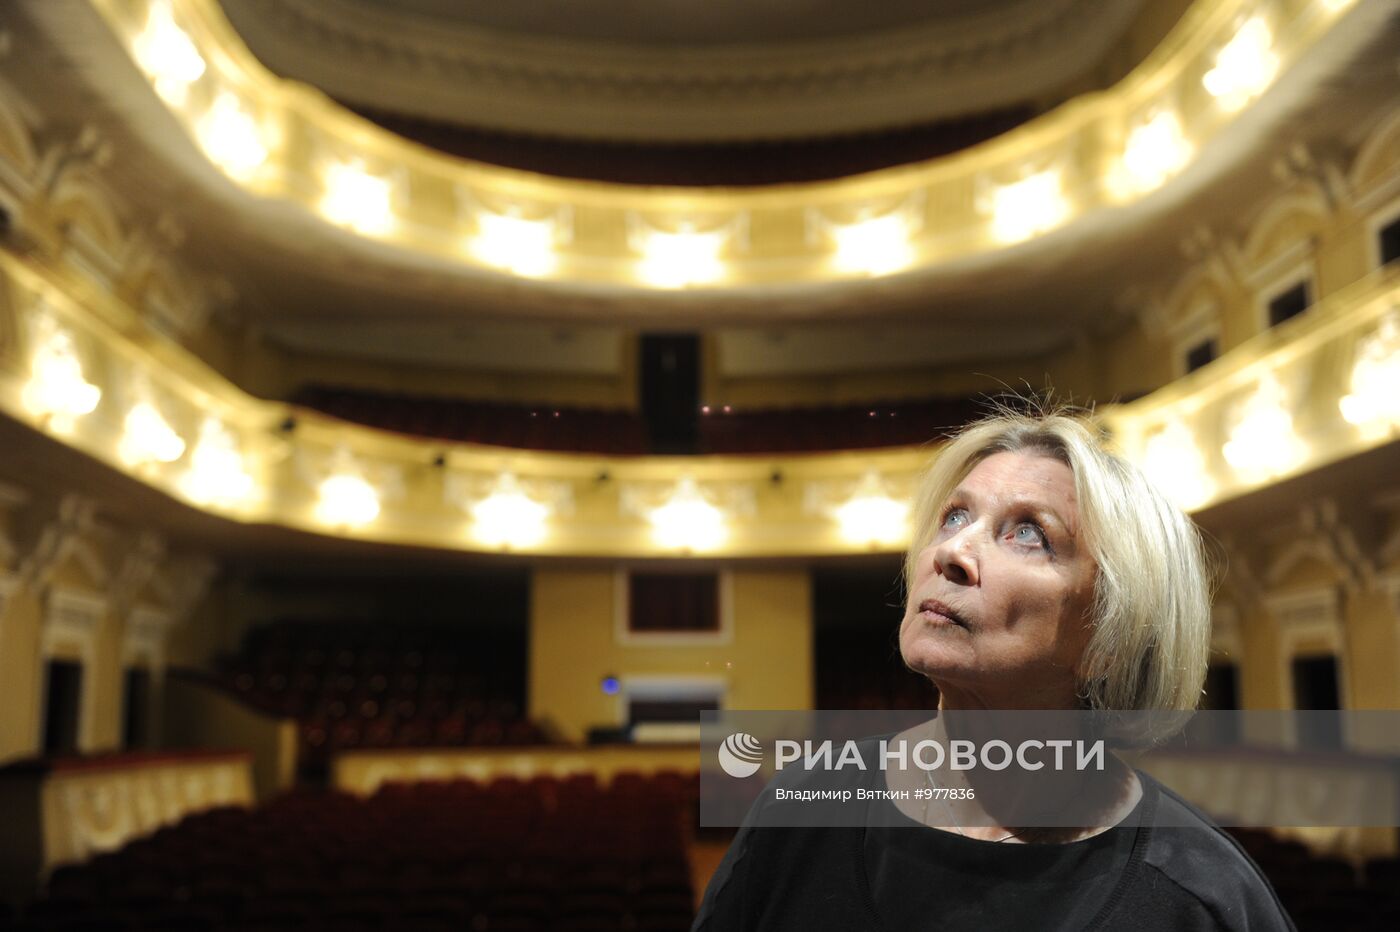 Алла Демидова в театрально-концертном зале "Дворец на Яузе"